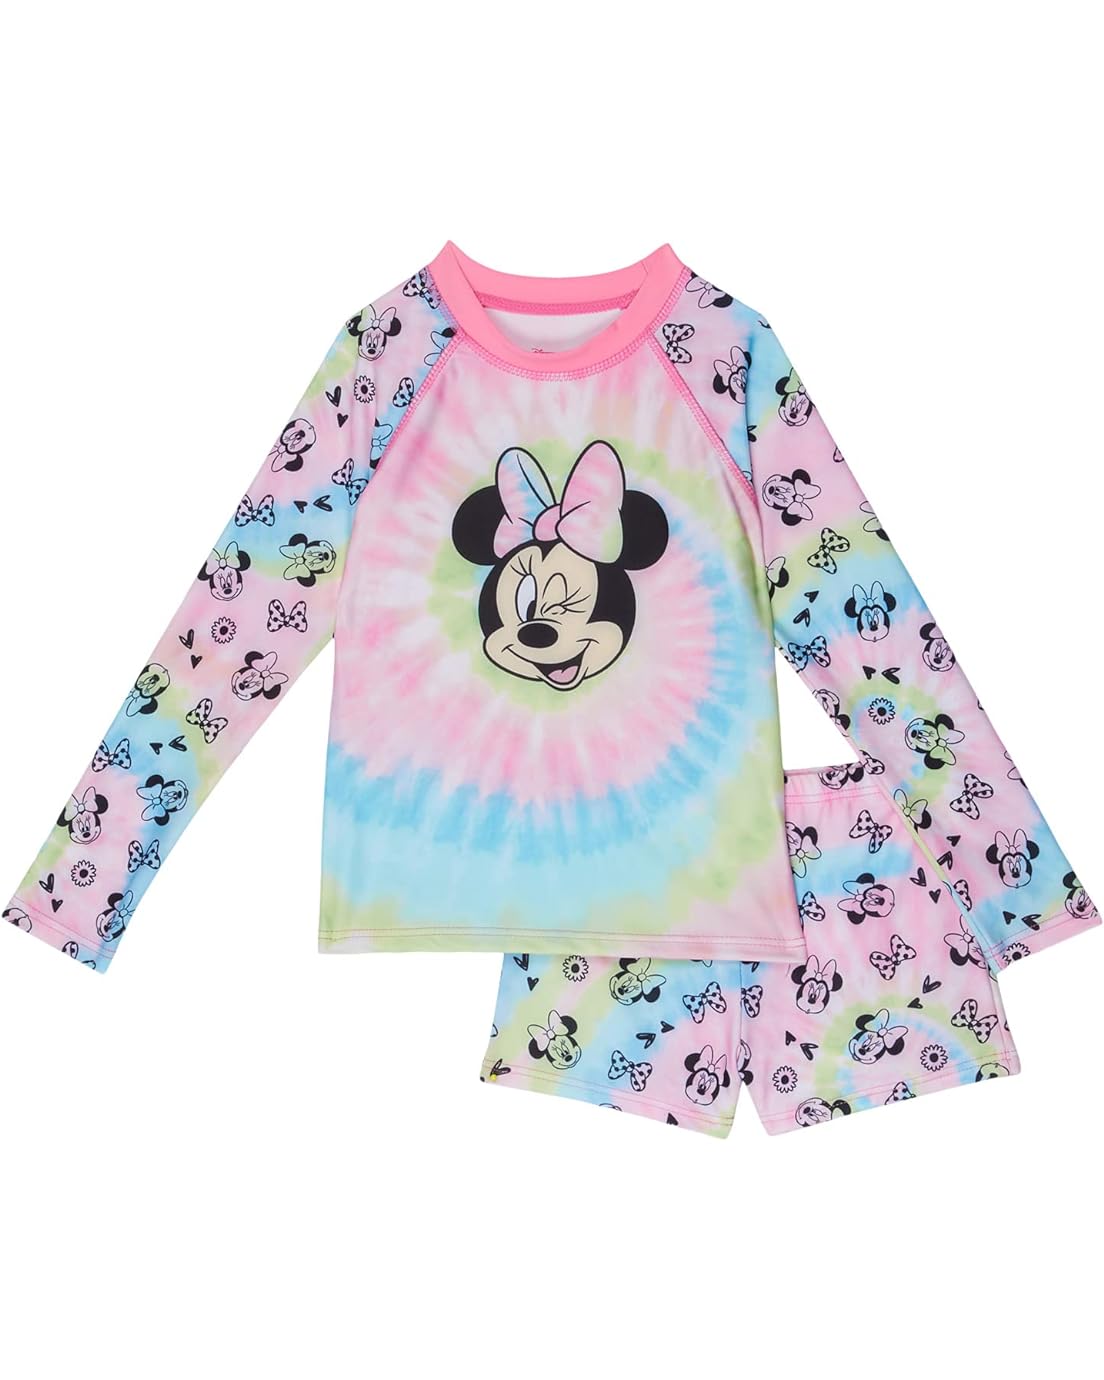 Dreamwave Minnie Mouse Swimwear (Toddler)